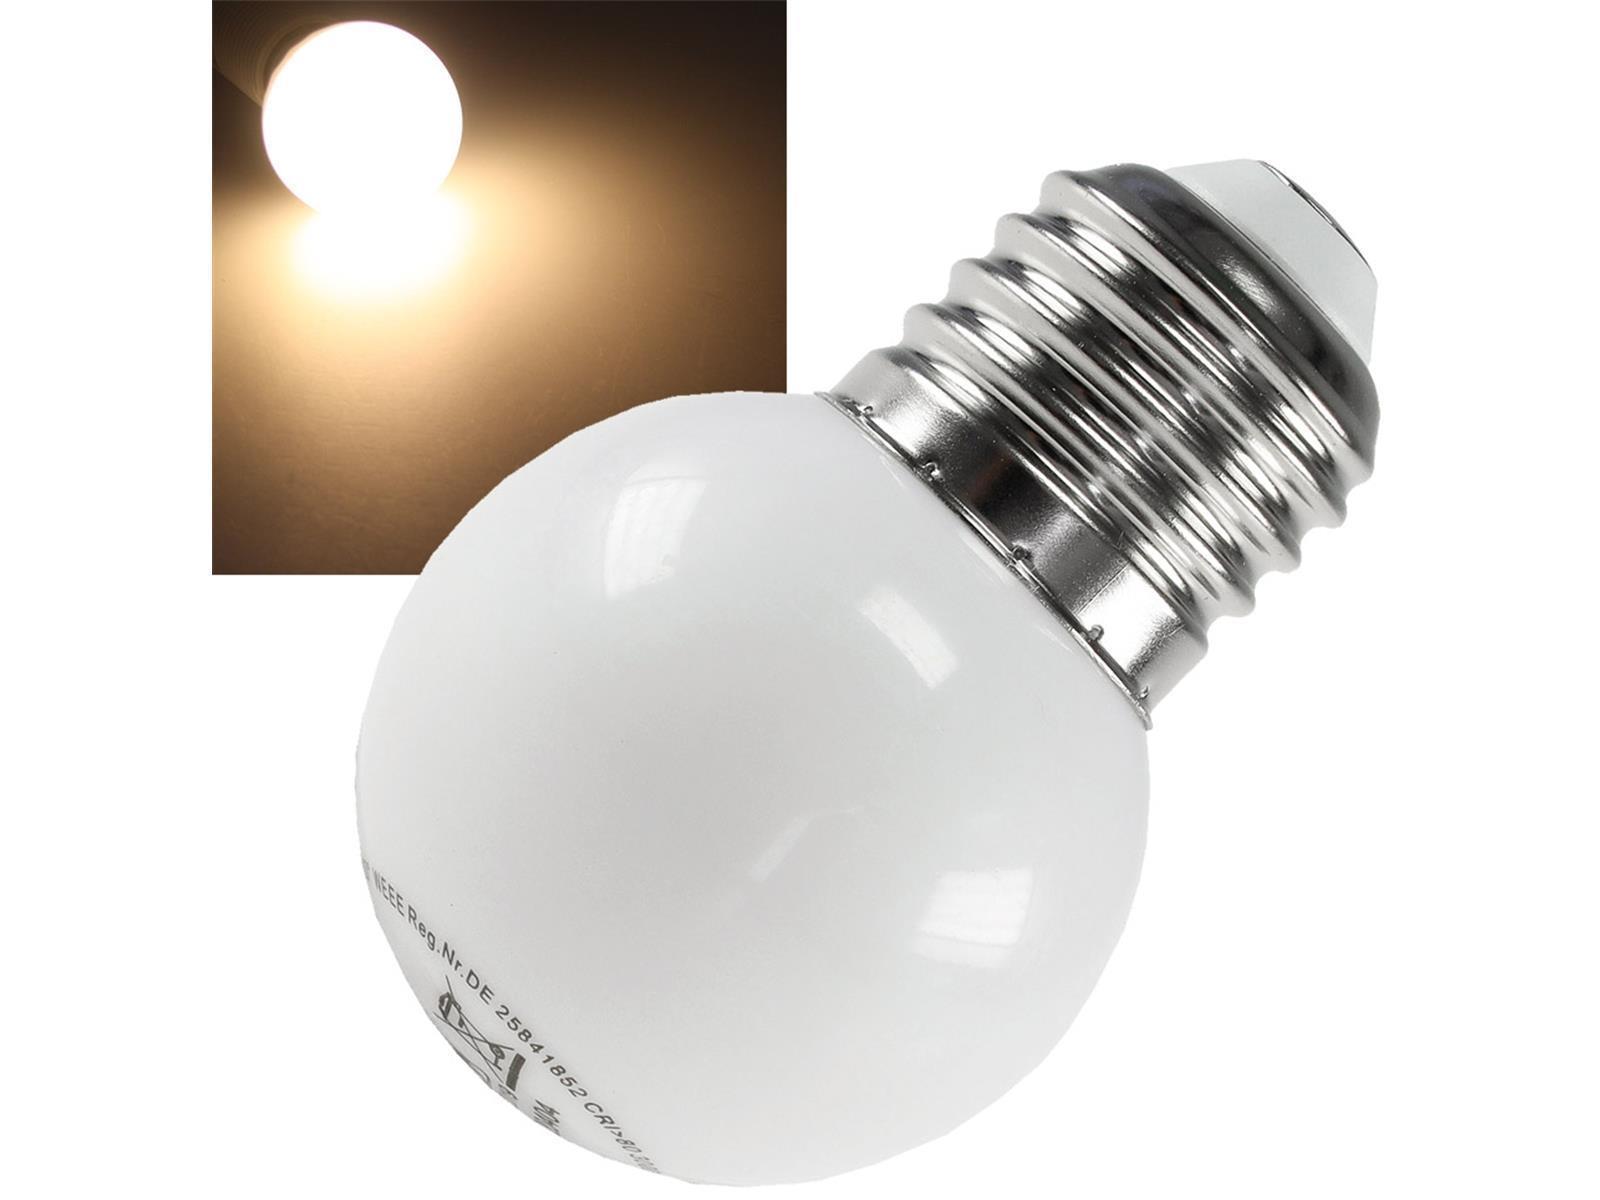 LED Tropfenlampe E27, 40mm Ø, warmweiß 3000k, 34lm, 120°, 230V/1W